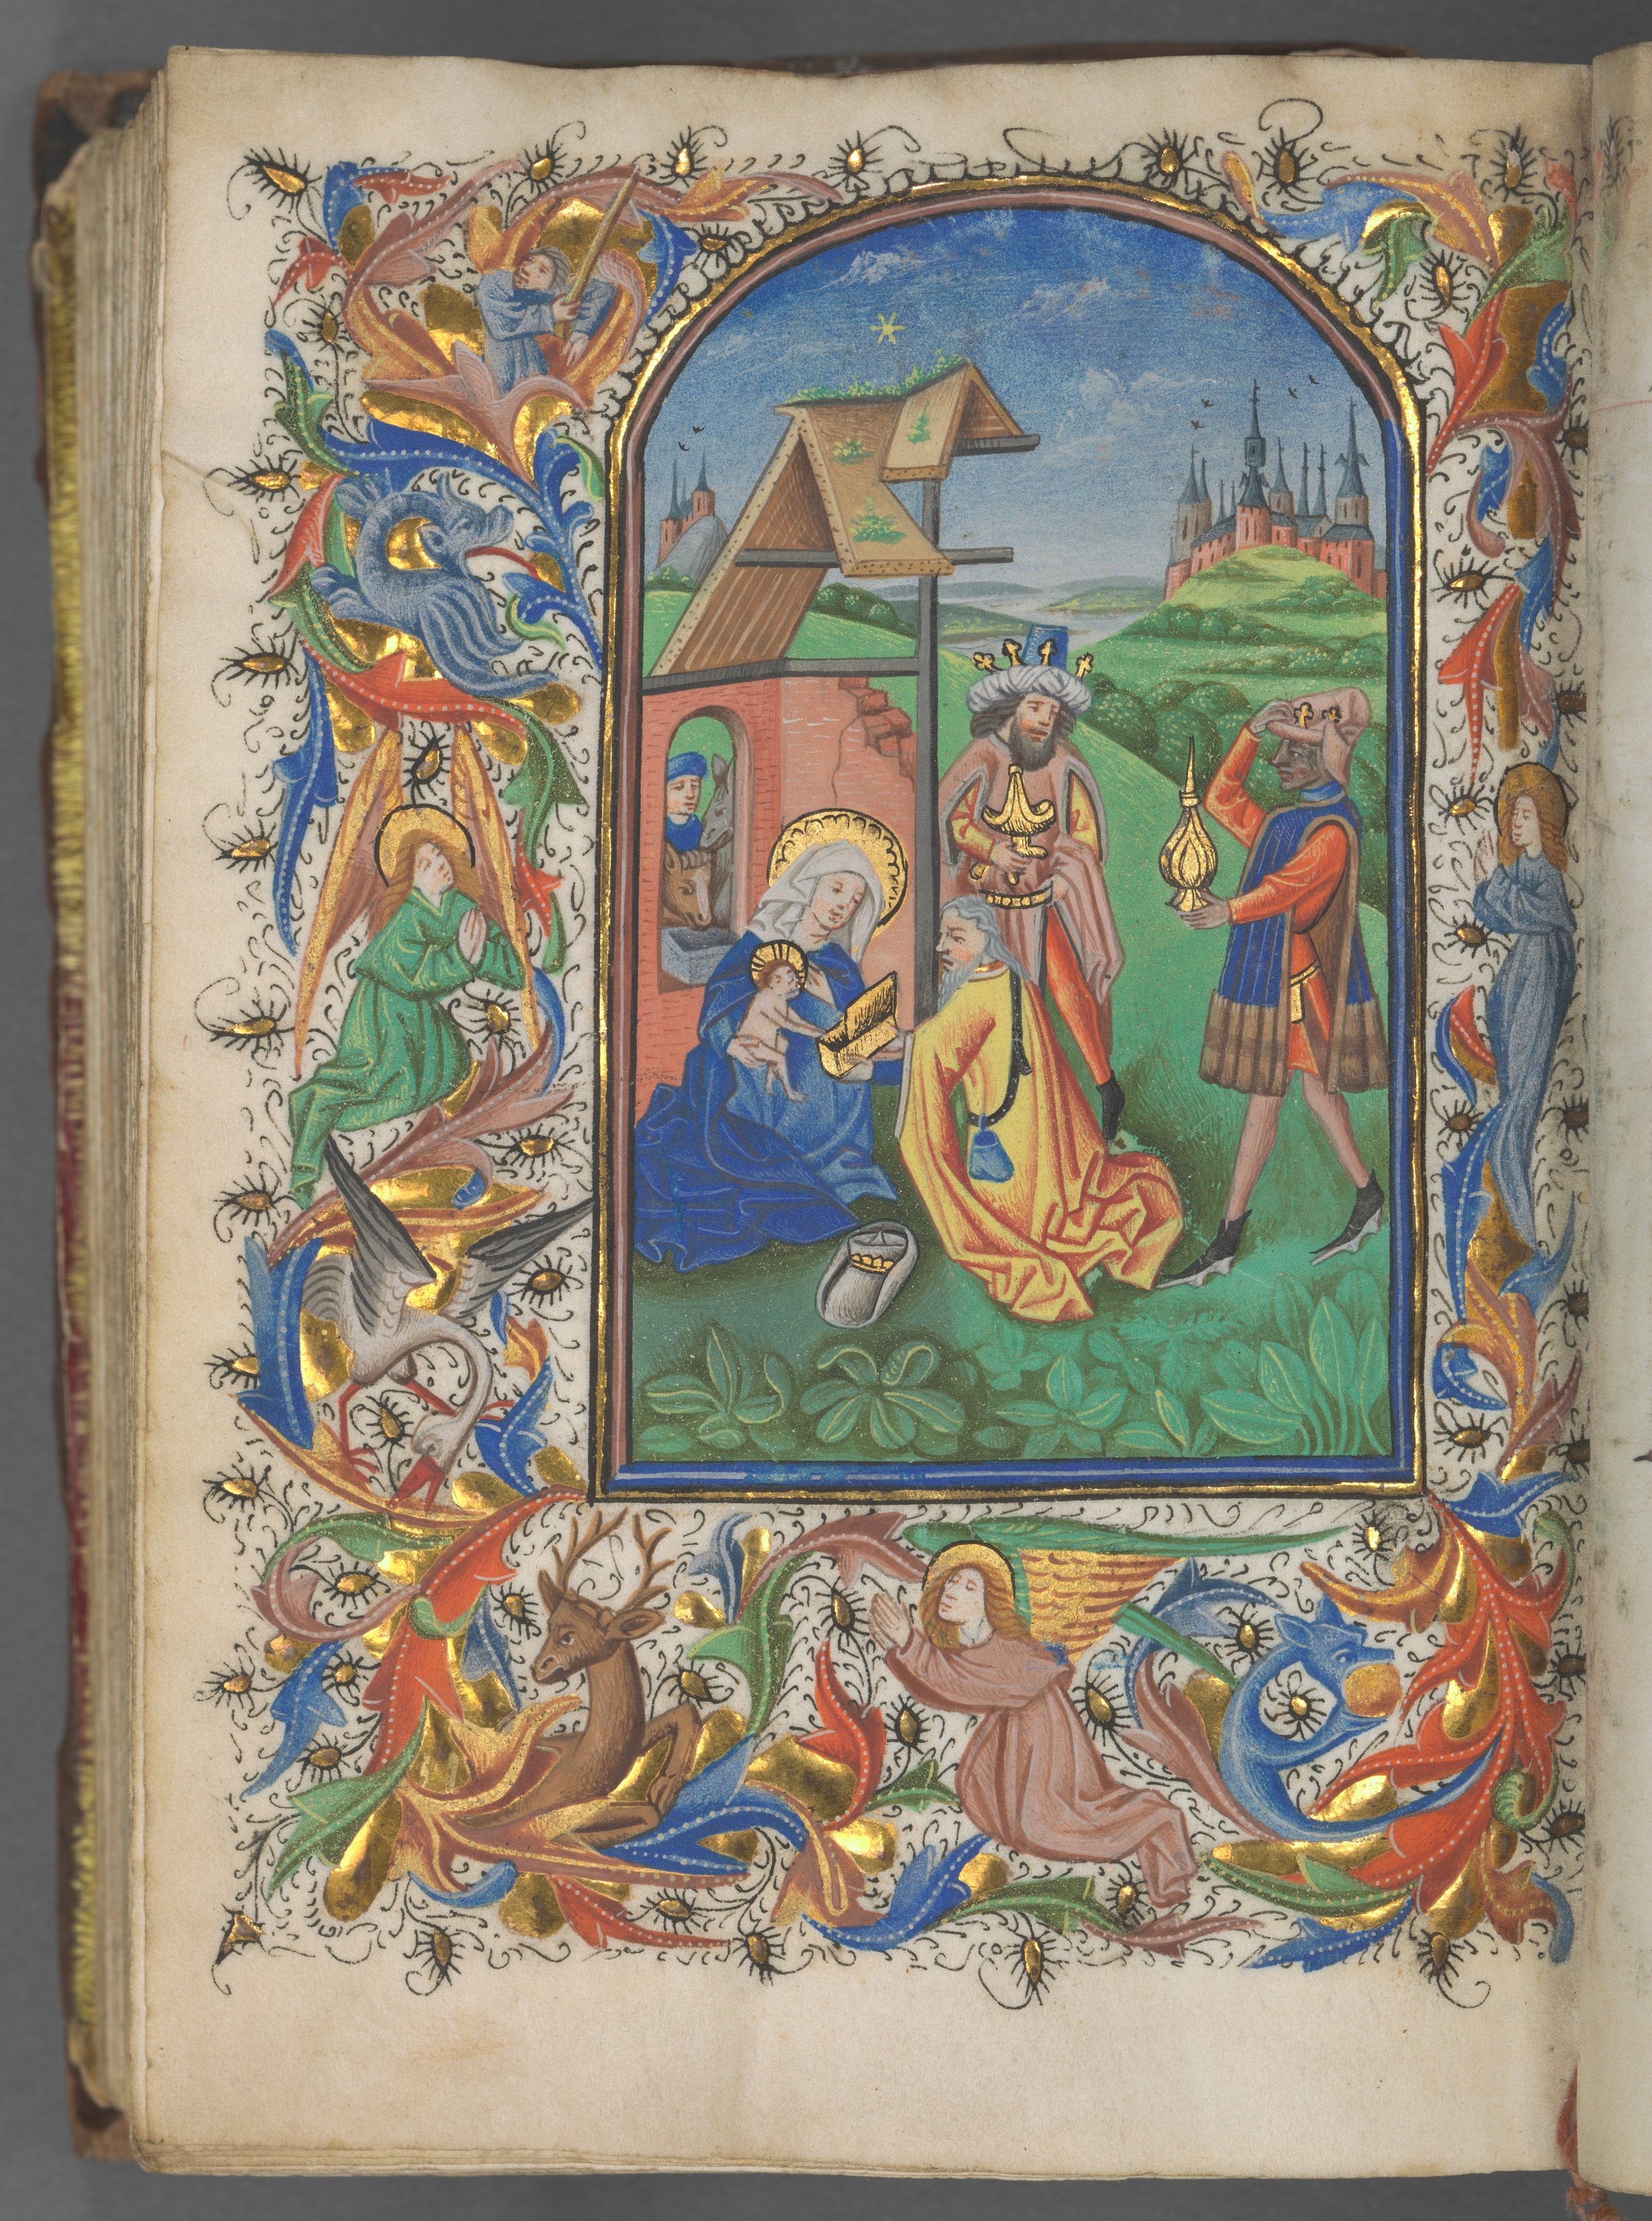 Book of Hours (Use of Utrecht): fol. 221v, Adoration of the Magi